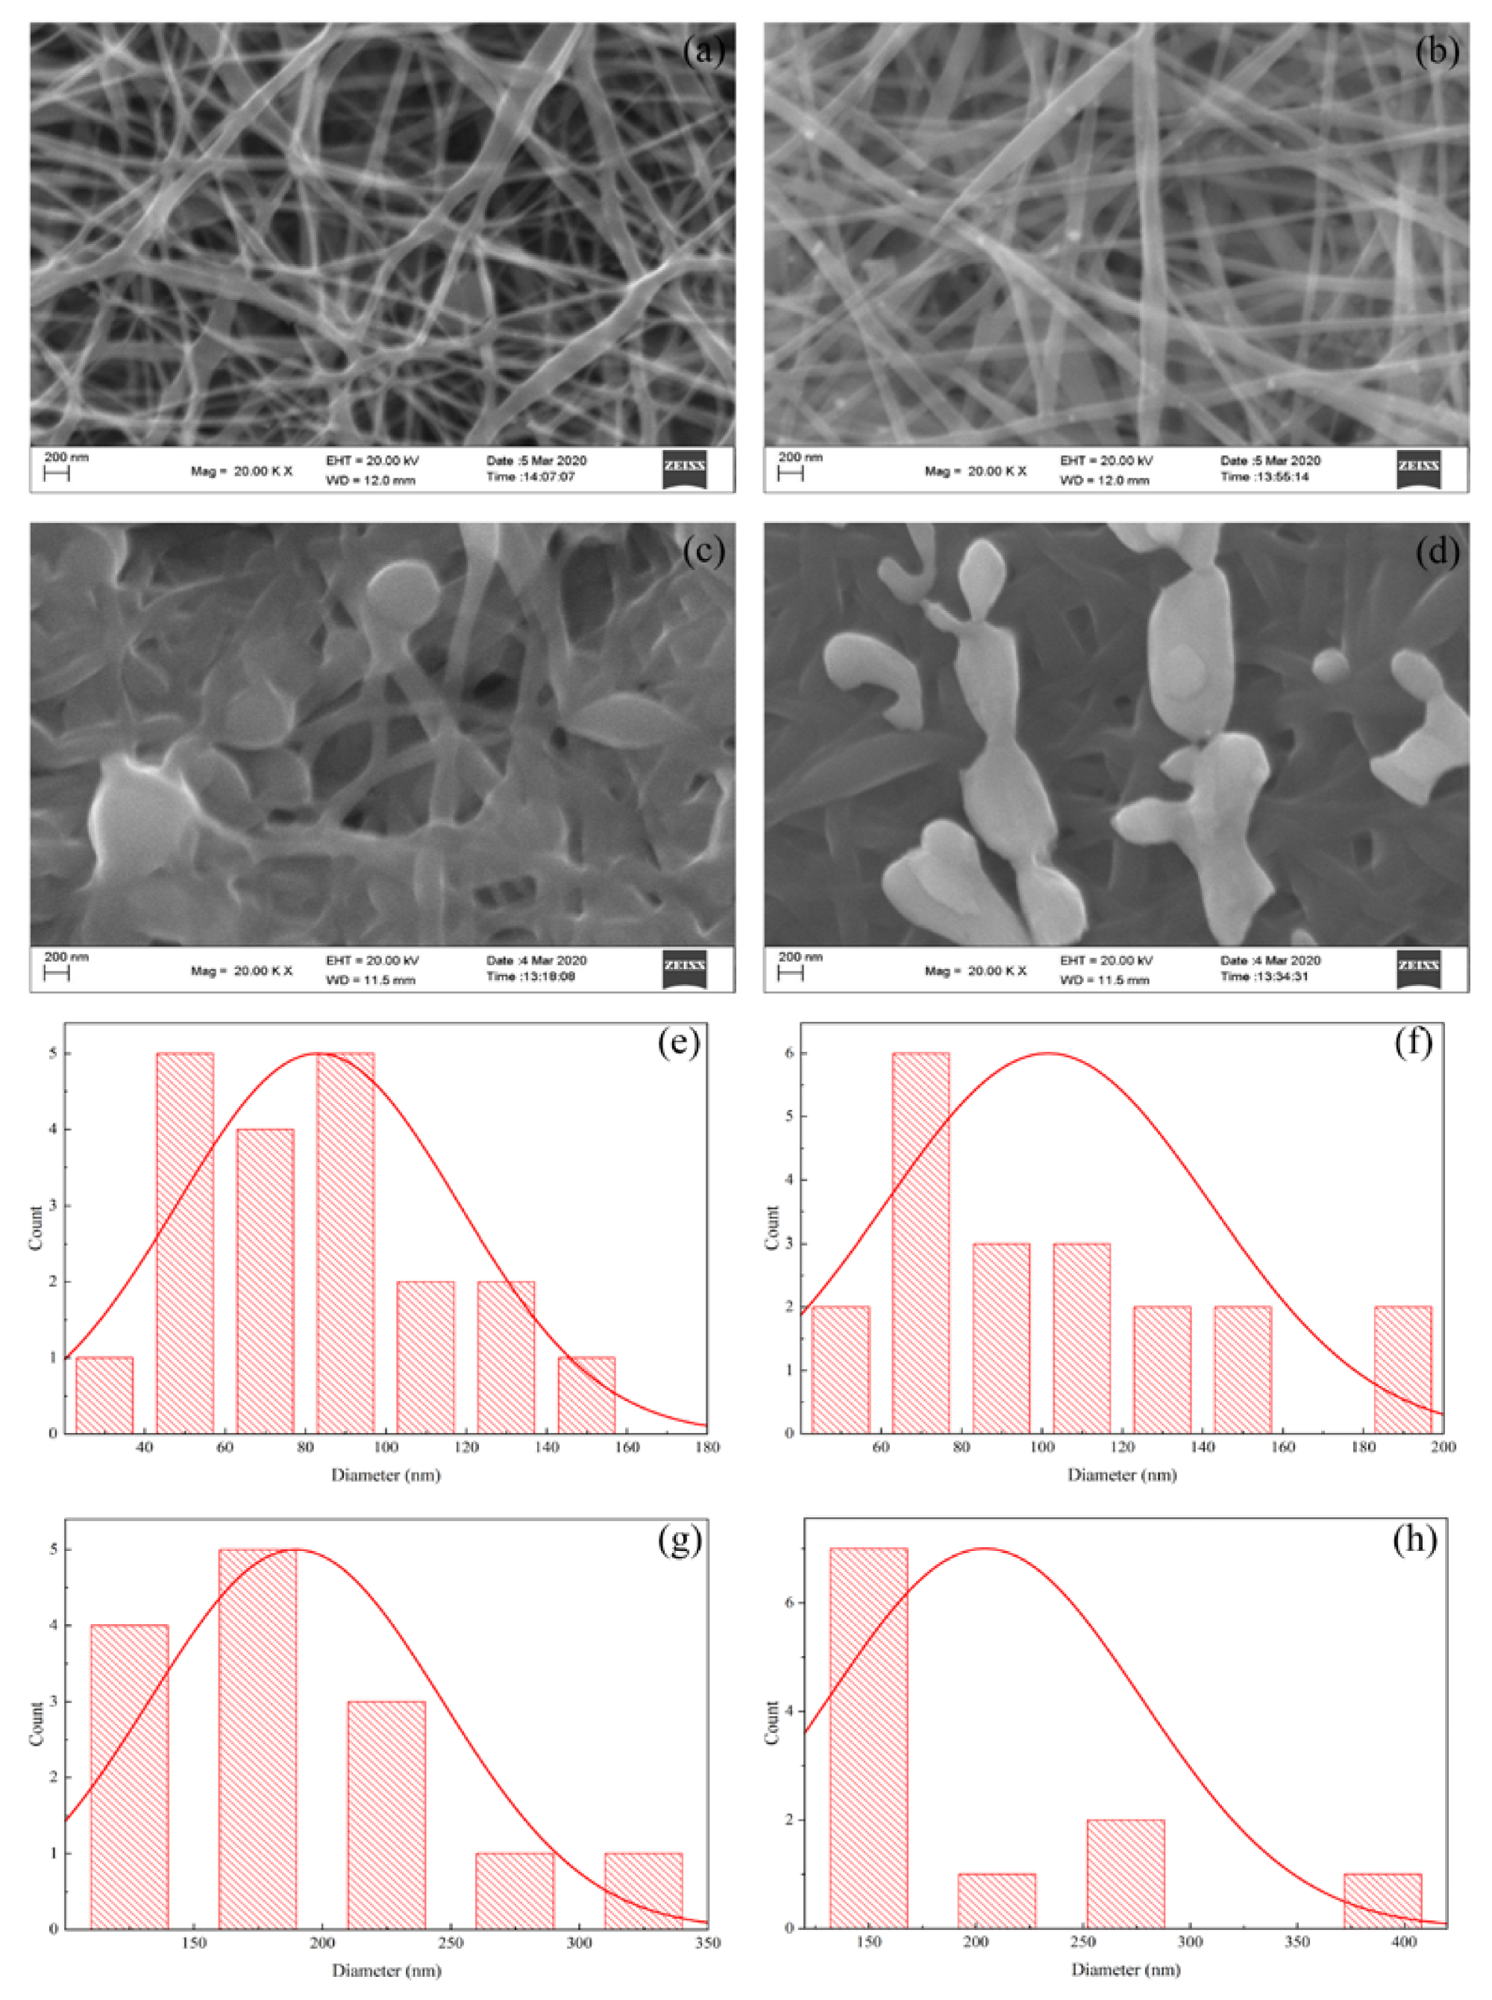 SEM morphological images of (a) PVA nanofiber; (b) PVA/AgNO3 Nanofiber; (c) iodinated PVA nanofiber; (d) iodinated PVA/AgNO3 nanofiber, and the diameter-size distributions of (e) PVA nanofiber; (f) PVA/AgNO3; (g) iodinated PVA nanofiber; and (h) iodinated PVA/AgNO3 nanofiber.